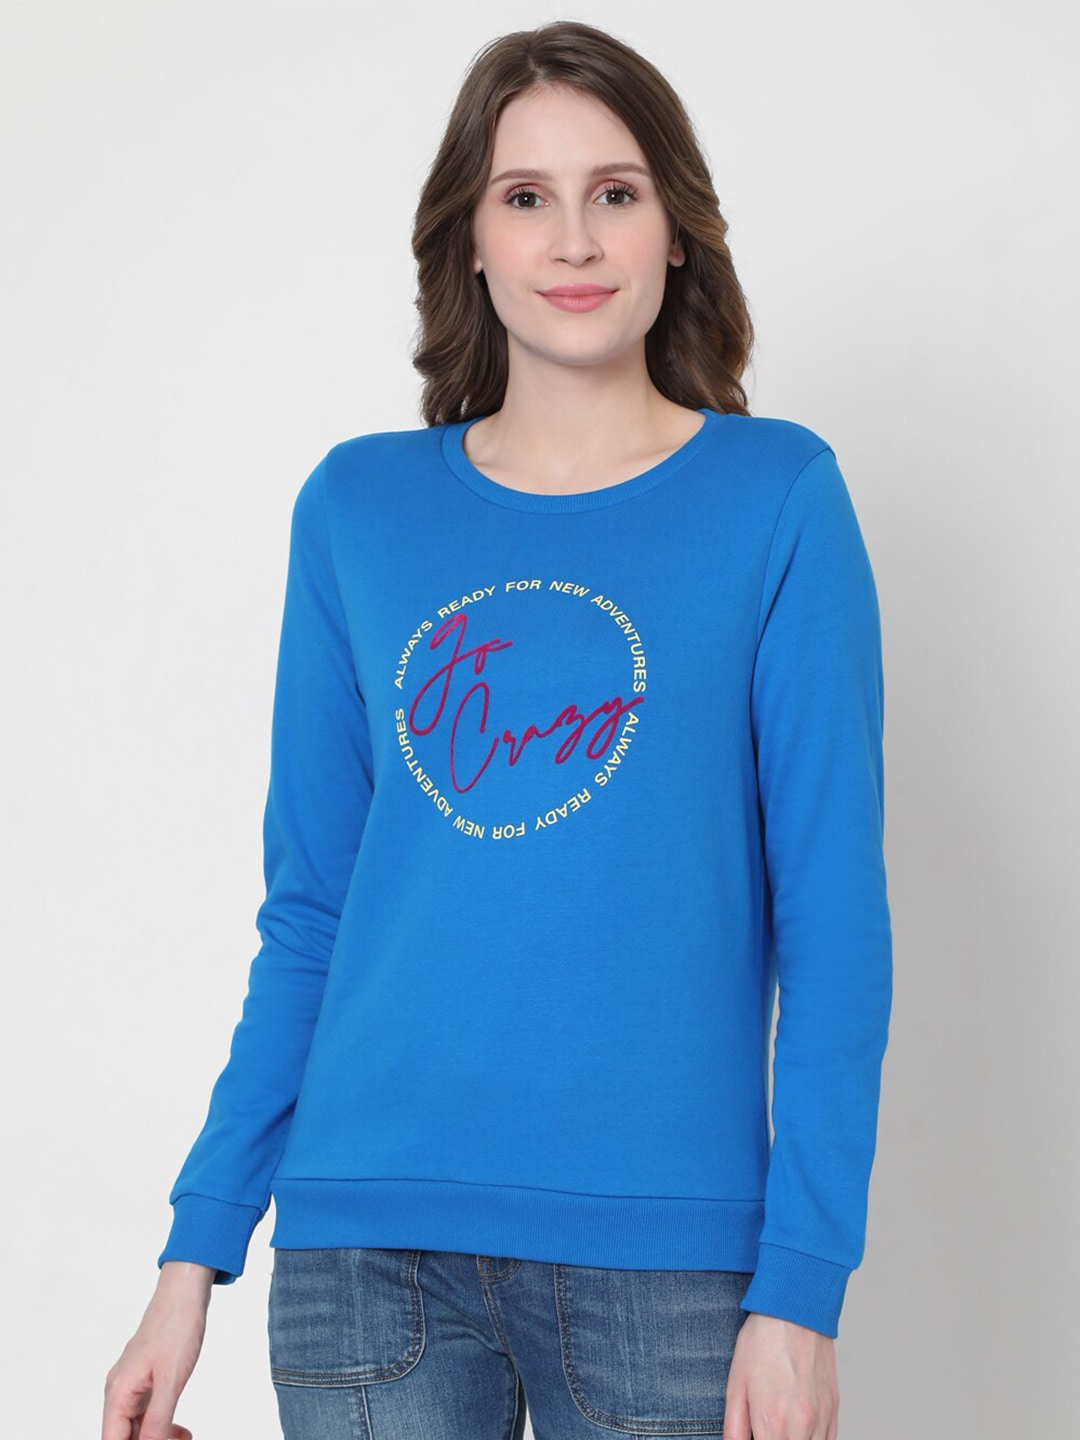 Vero Moda Women Blue Printed Sweatshirt Price in India